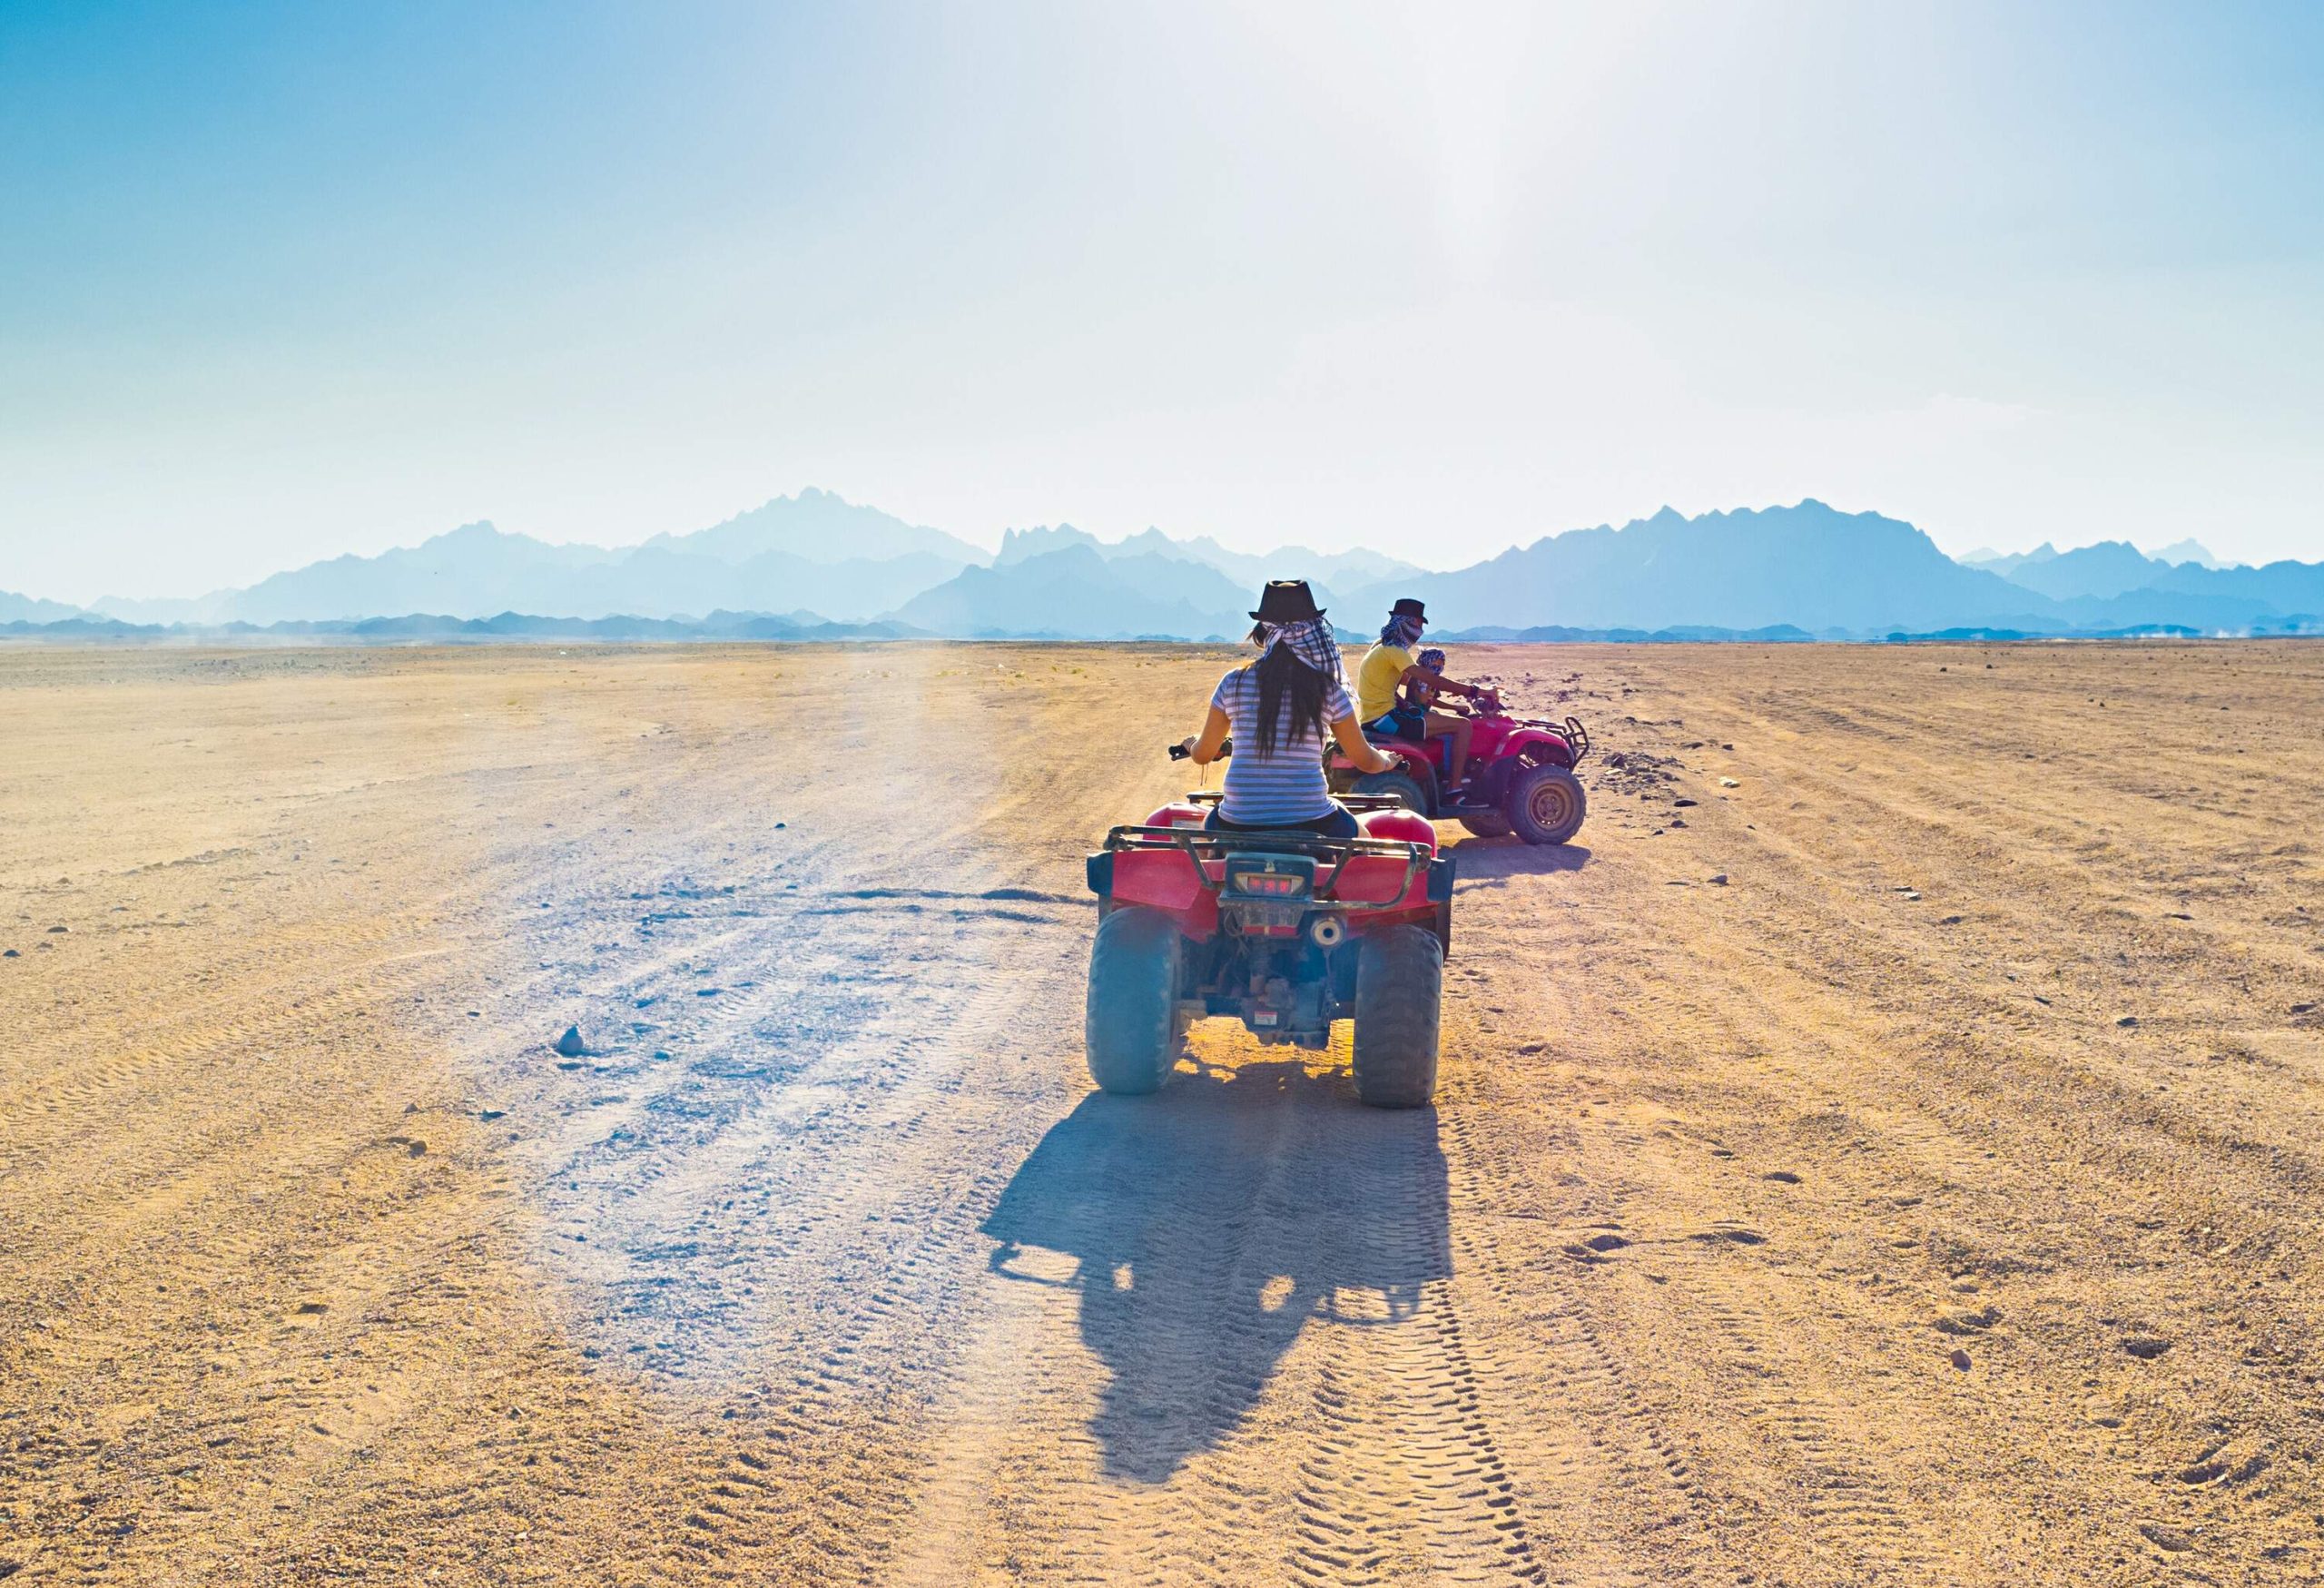 Tourists ride on quad bikes, traversing through a vast desert landscape.